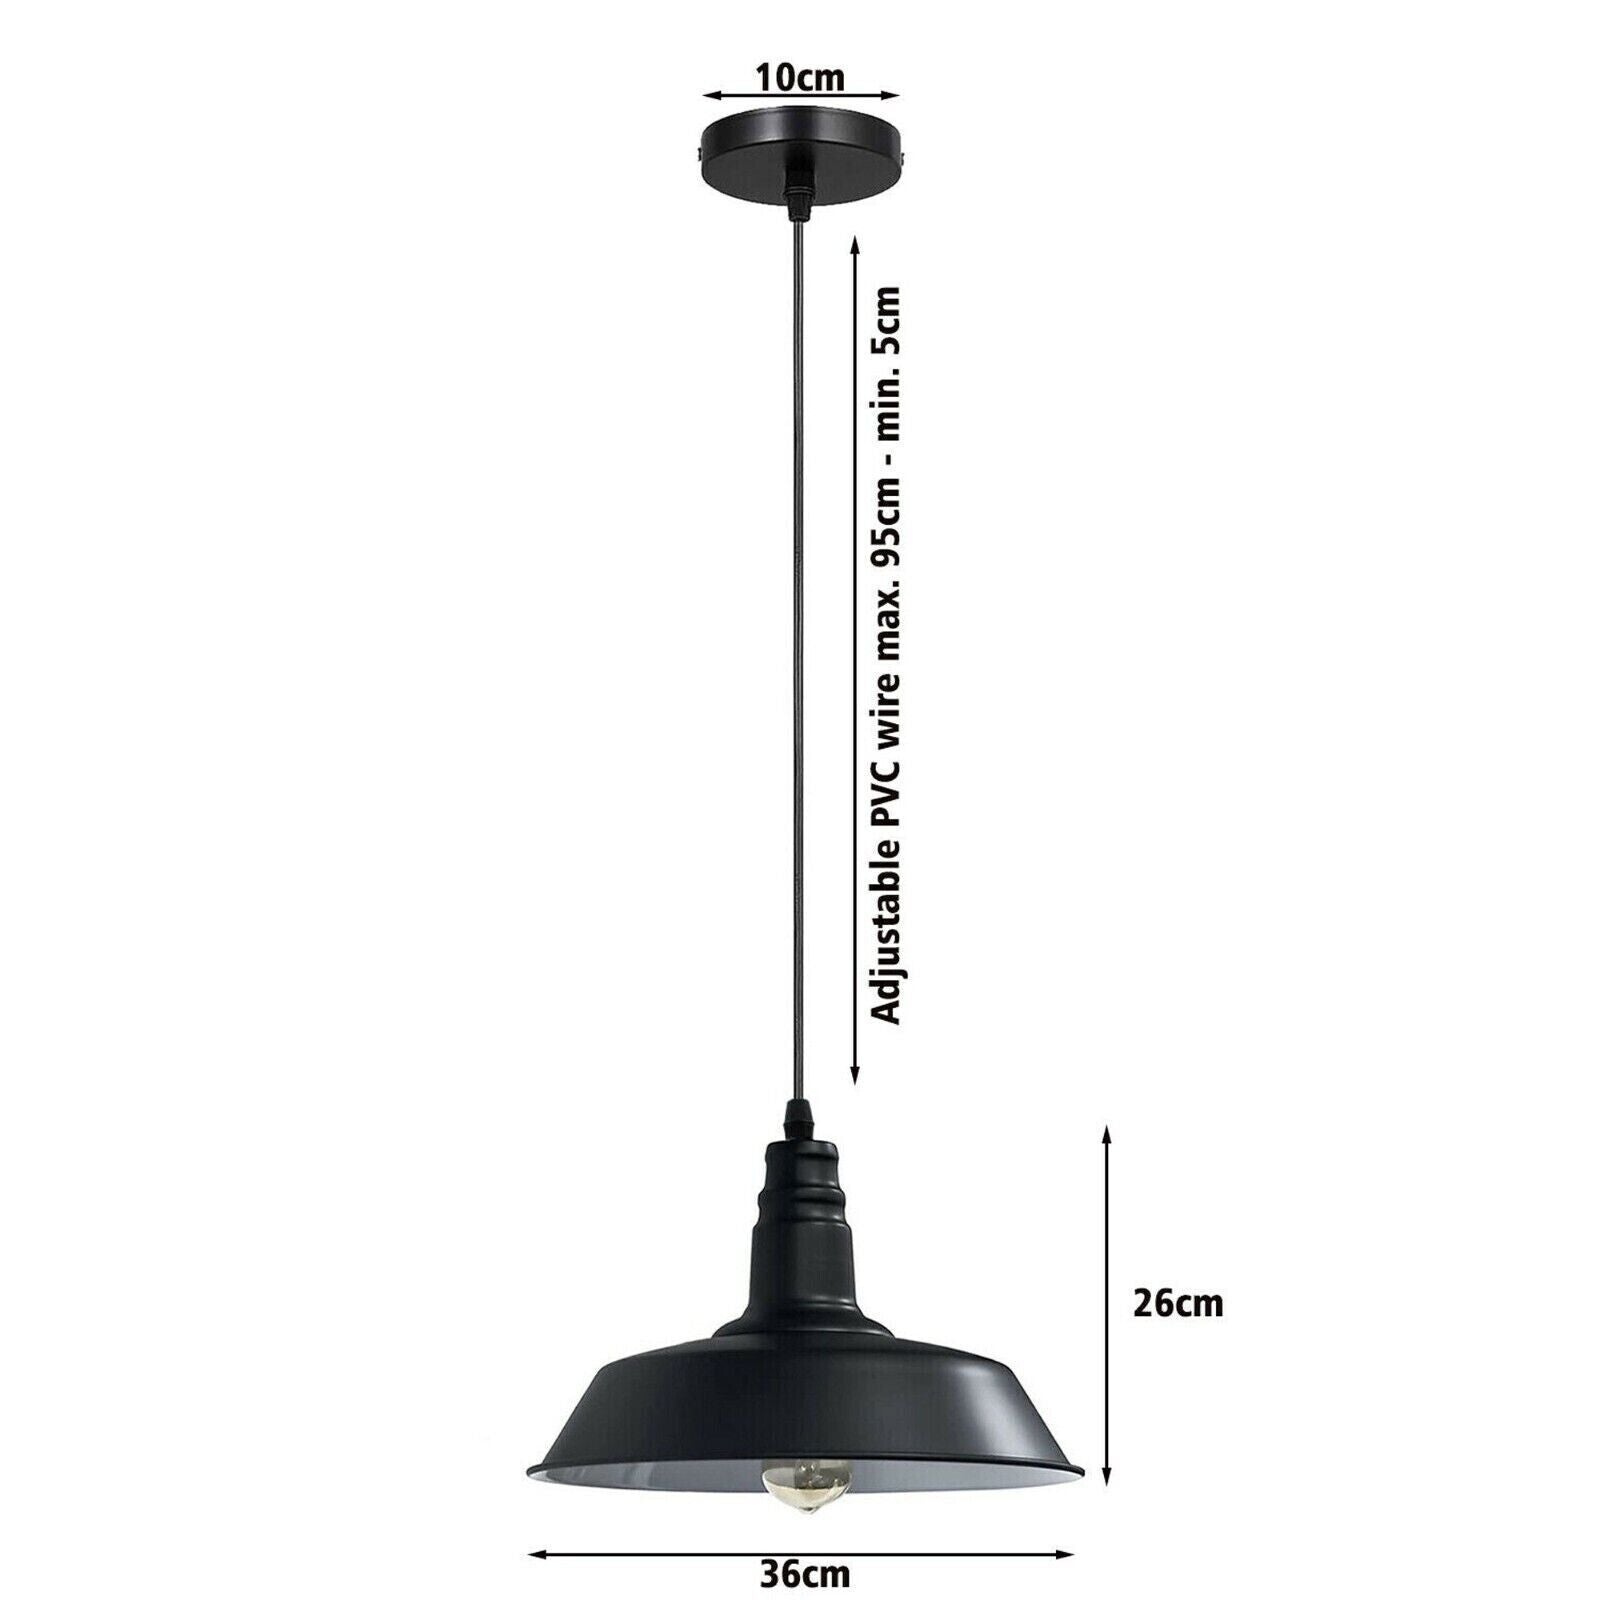 Hanging pendant Ceiling Lamp, Metal Light Shade Lighting UK E27 Edison base Decorate Height Adjustable Pendant Light 